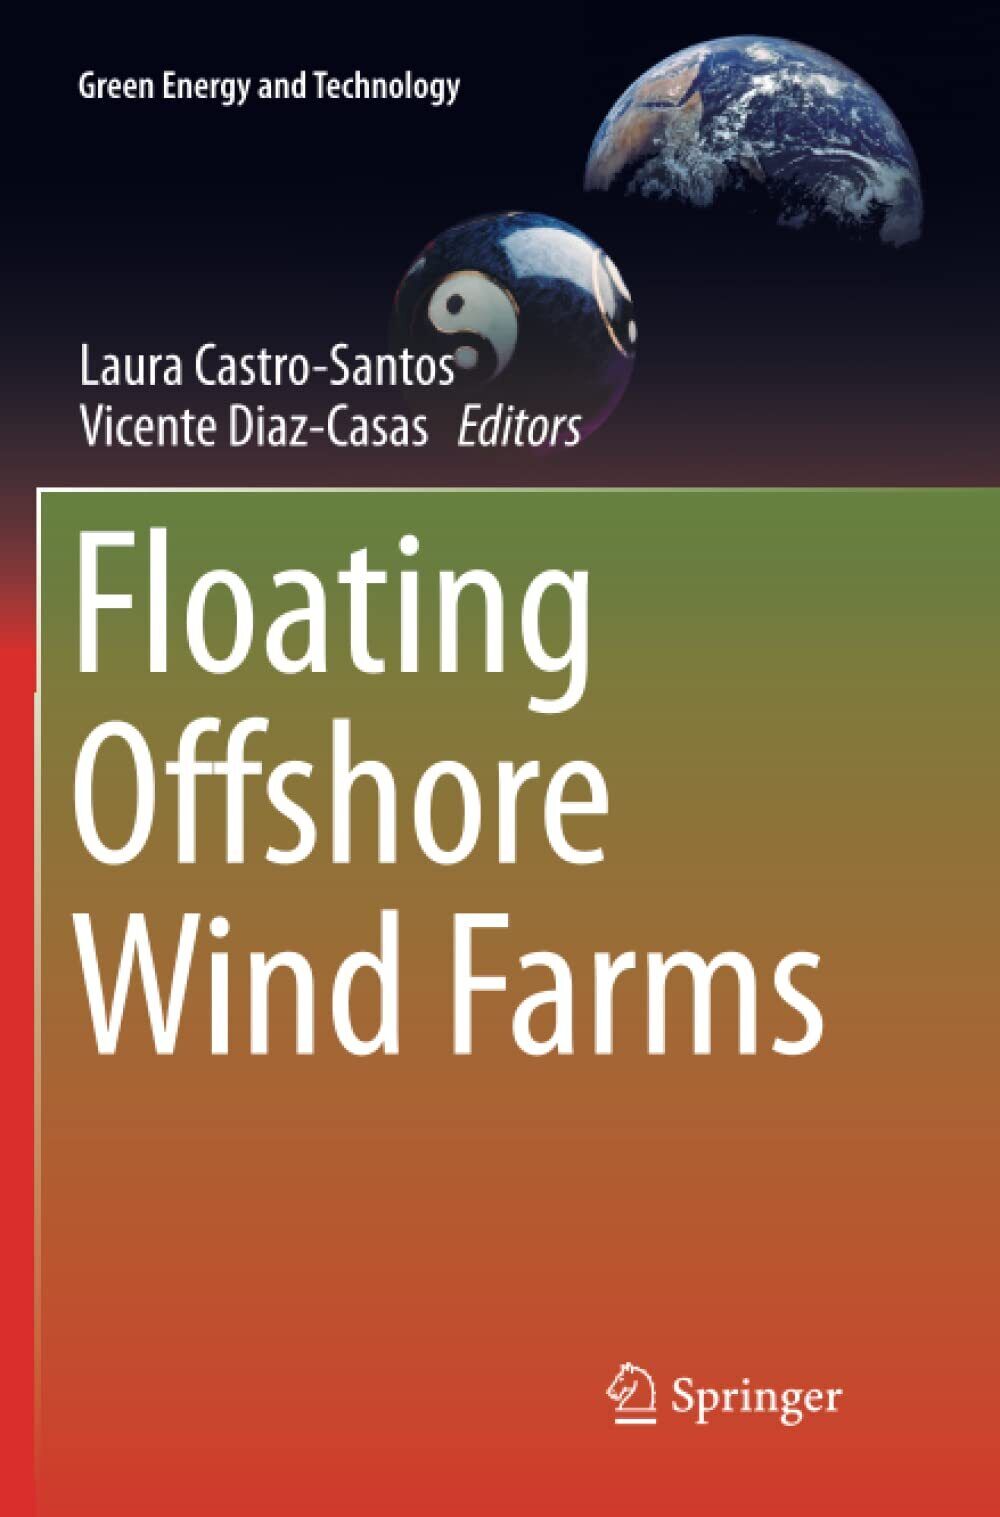 Floating Offshore Wind Farms - Laura Castro-Santos - Springer, 2018